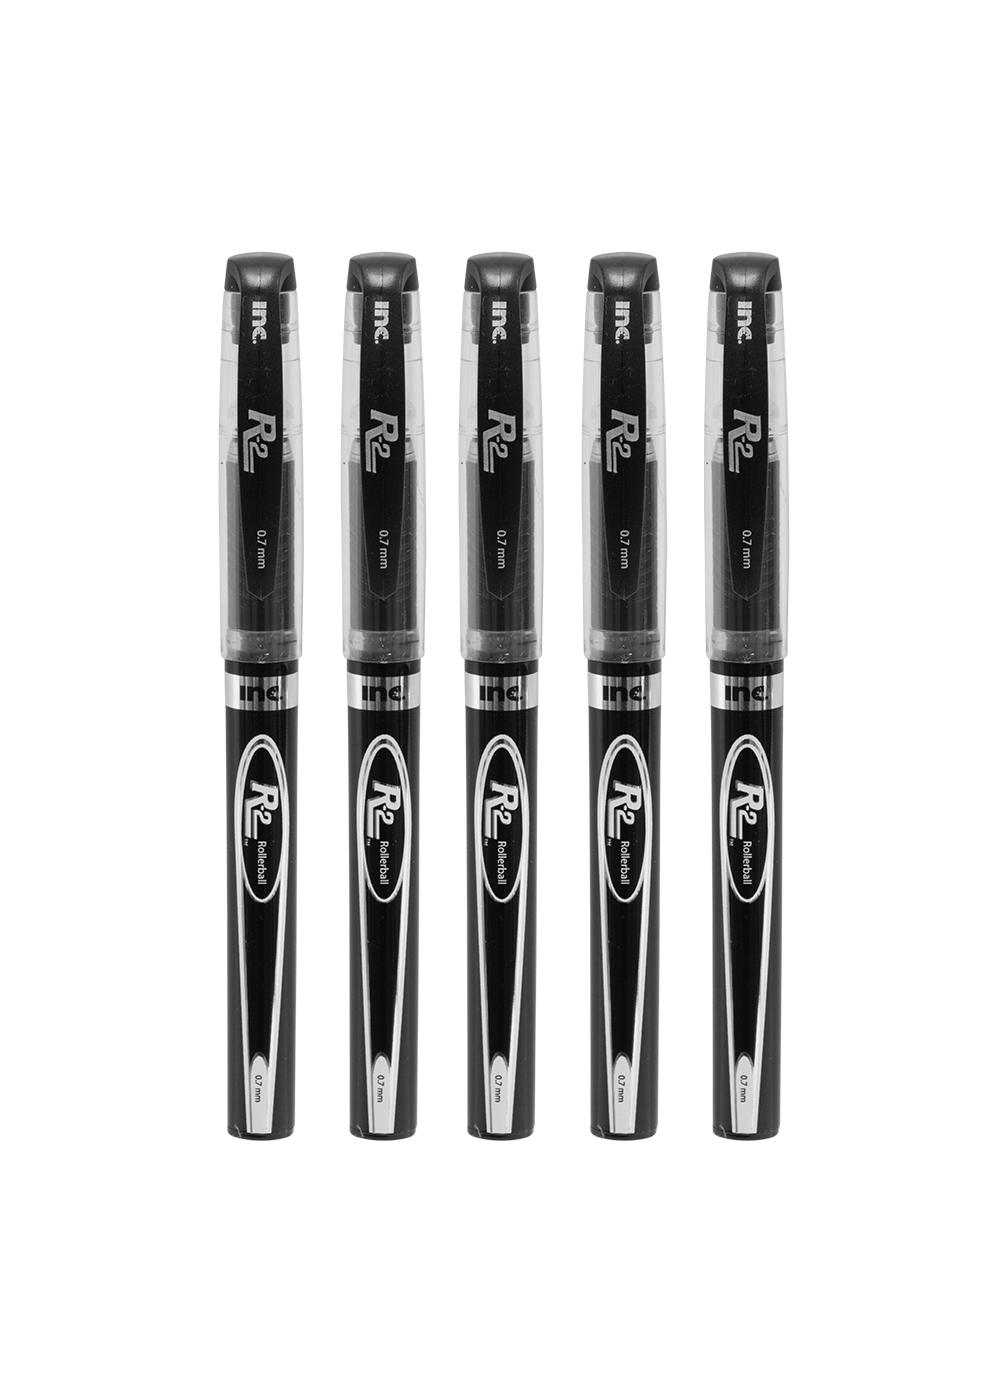 Inc R2 0.7mm Rollerball Pens - Black Ink; image 3 of 3